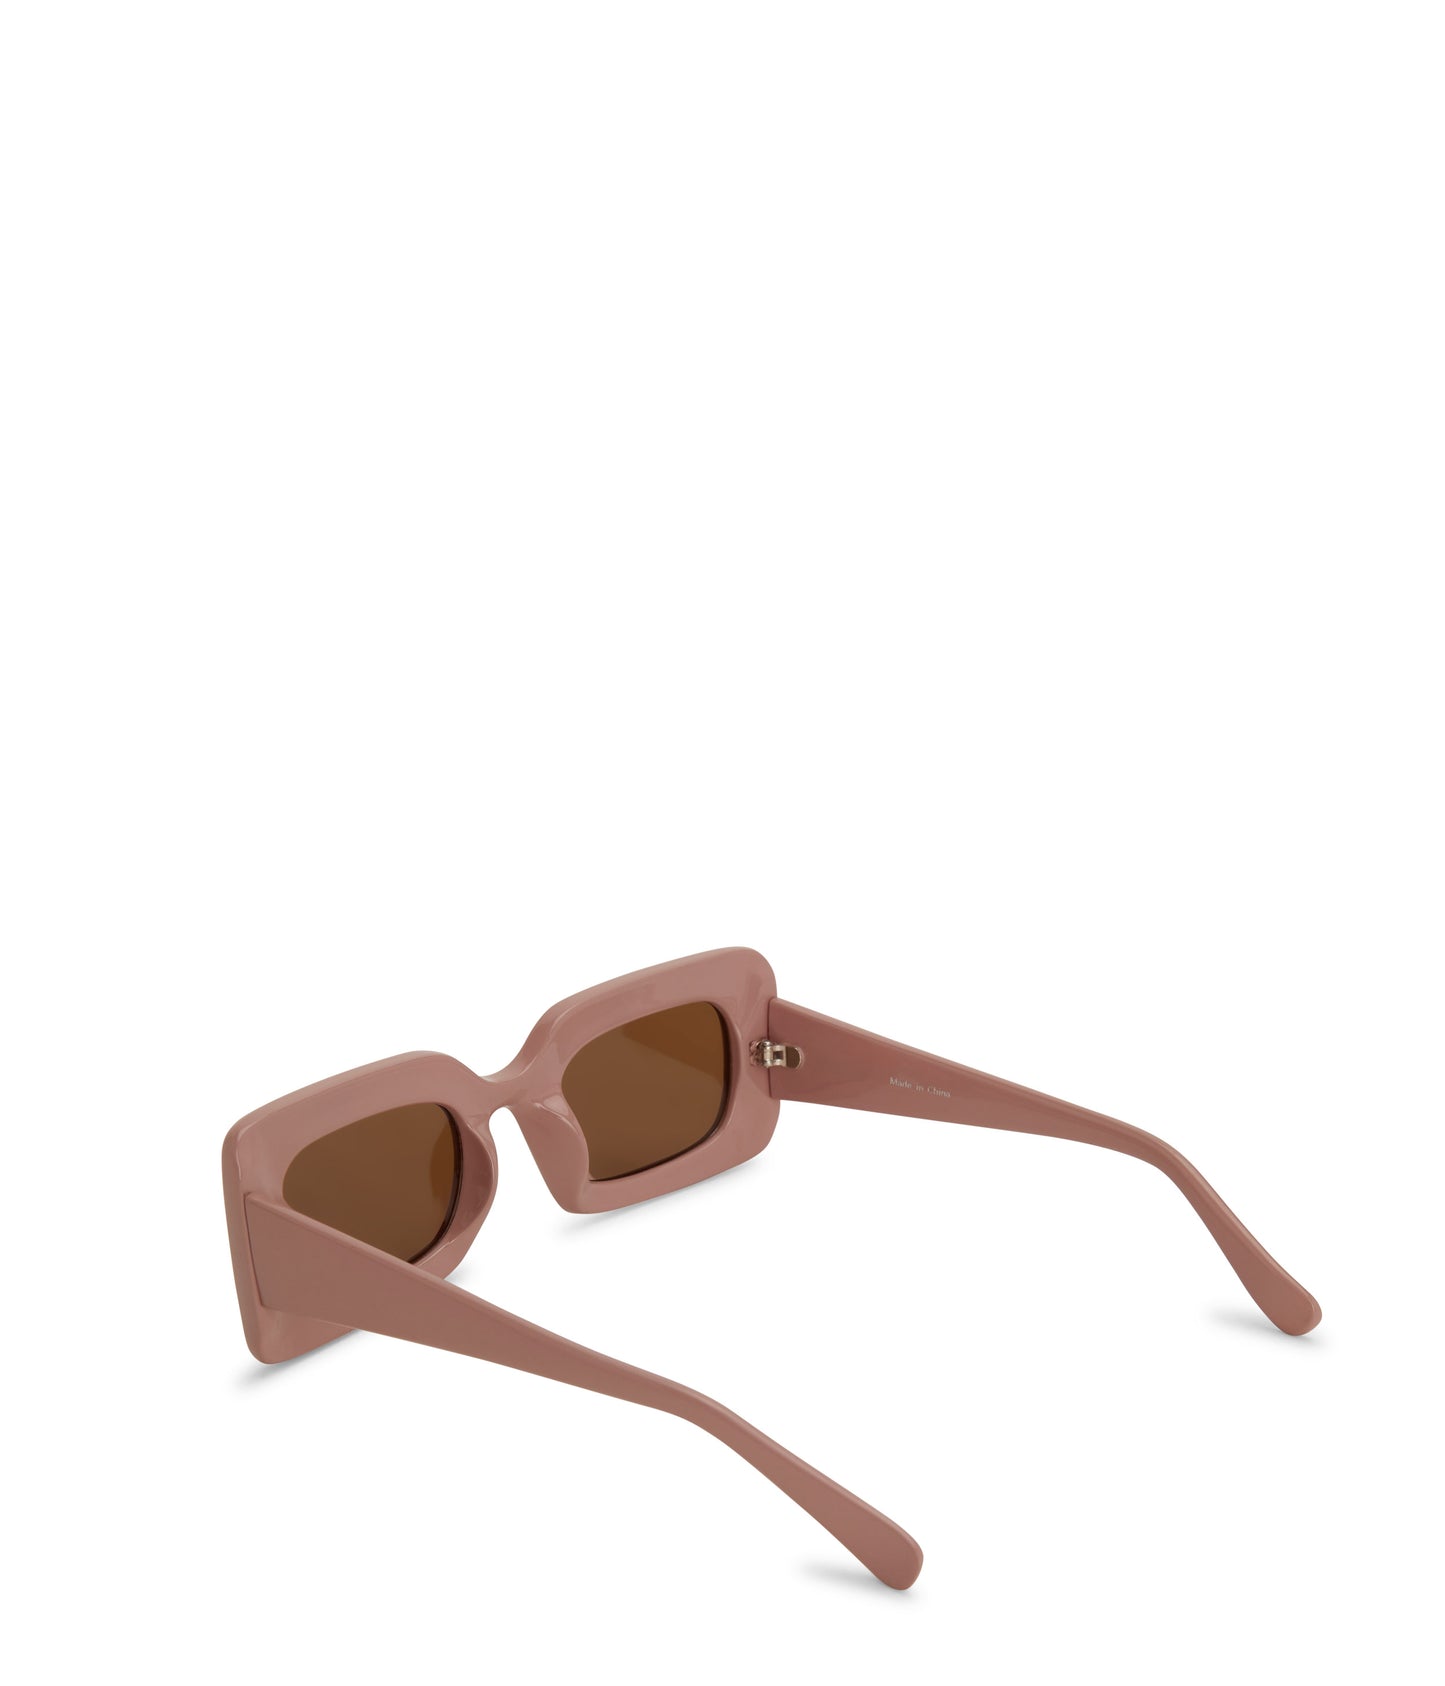 variant:: lis -- tito sunglasses lis